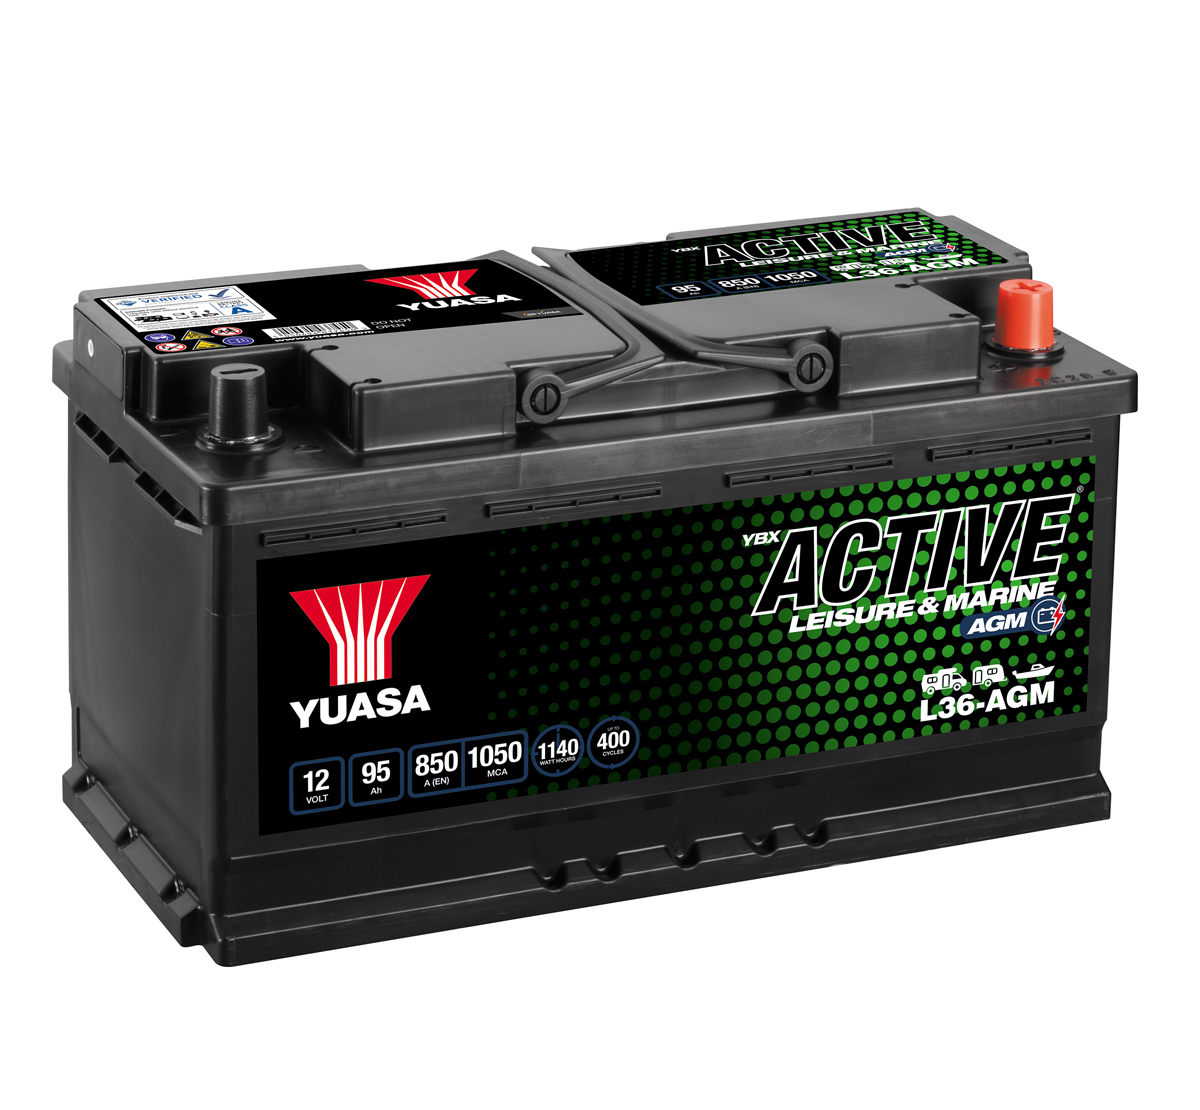 Yuasa YBX Active L36-AGM Leisure Battery